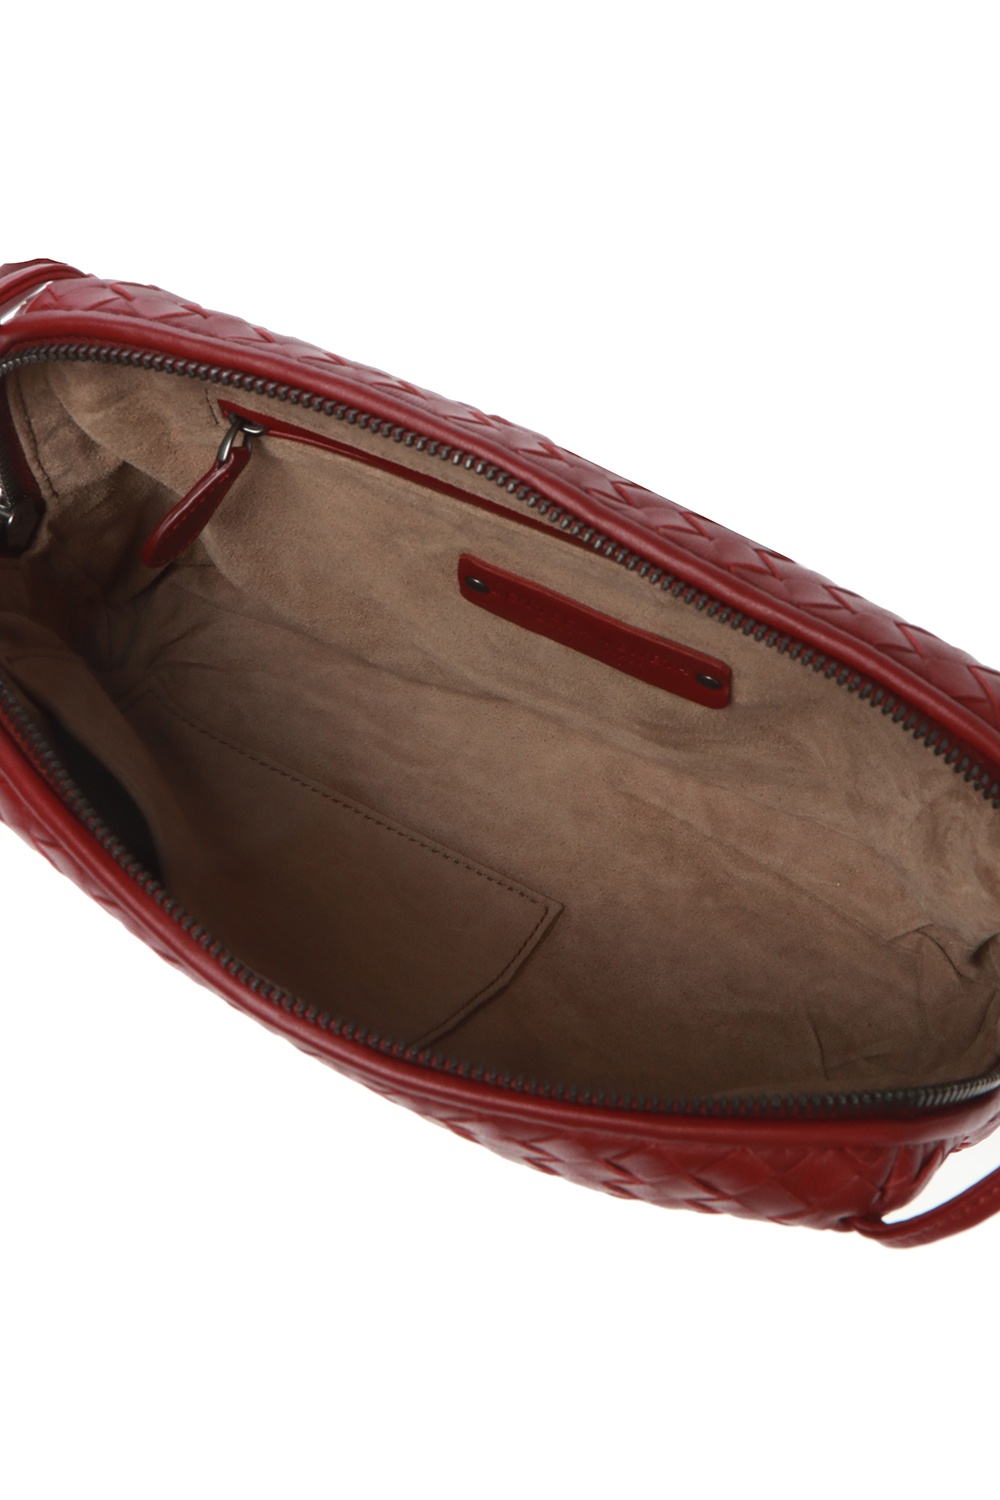 Bottega Veneta 'Nodini' leather Shoulder Bag, Women's Bags